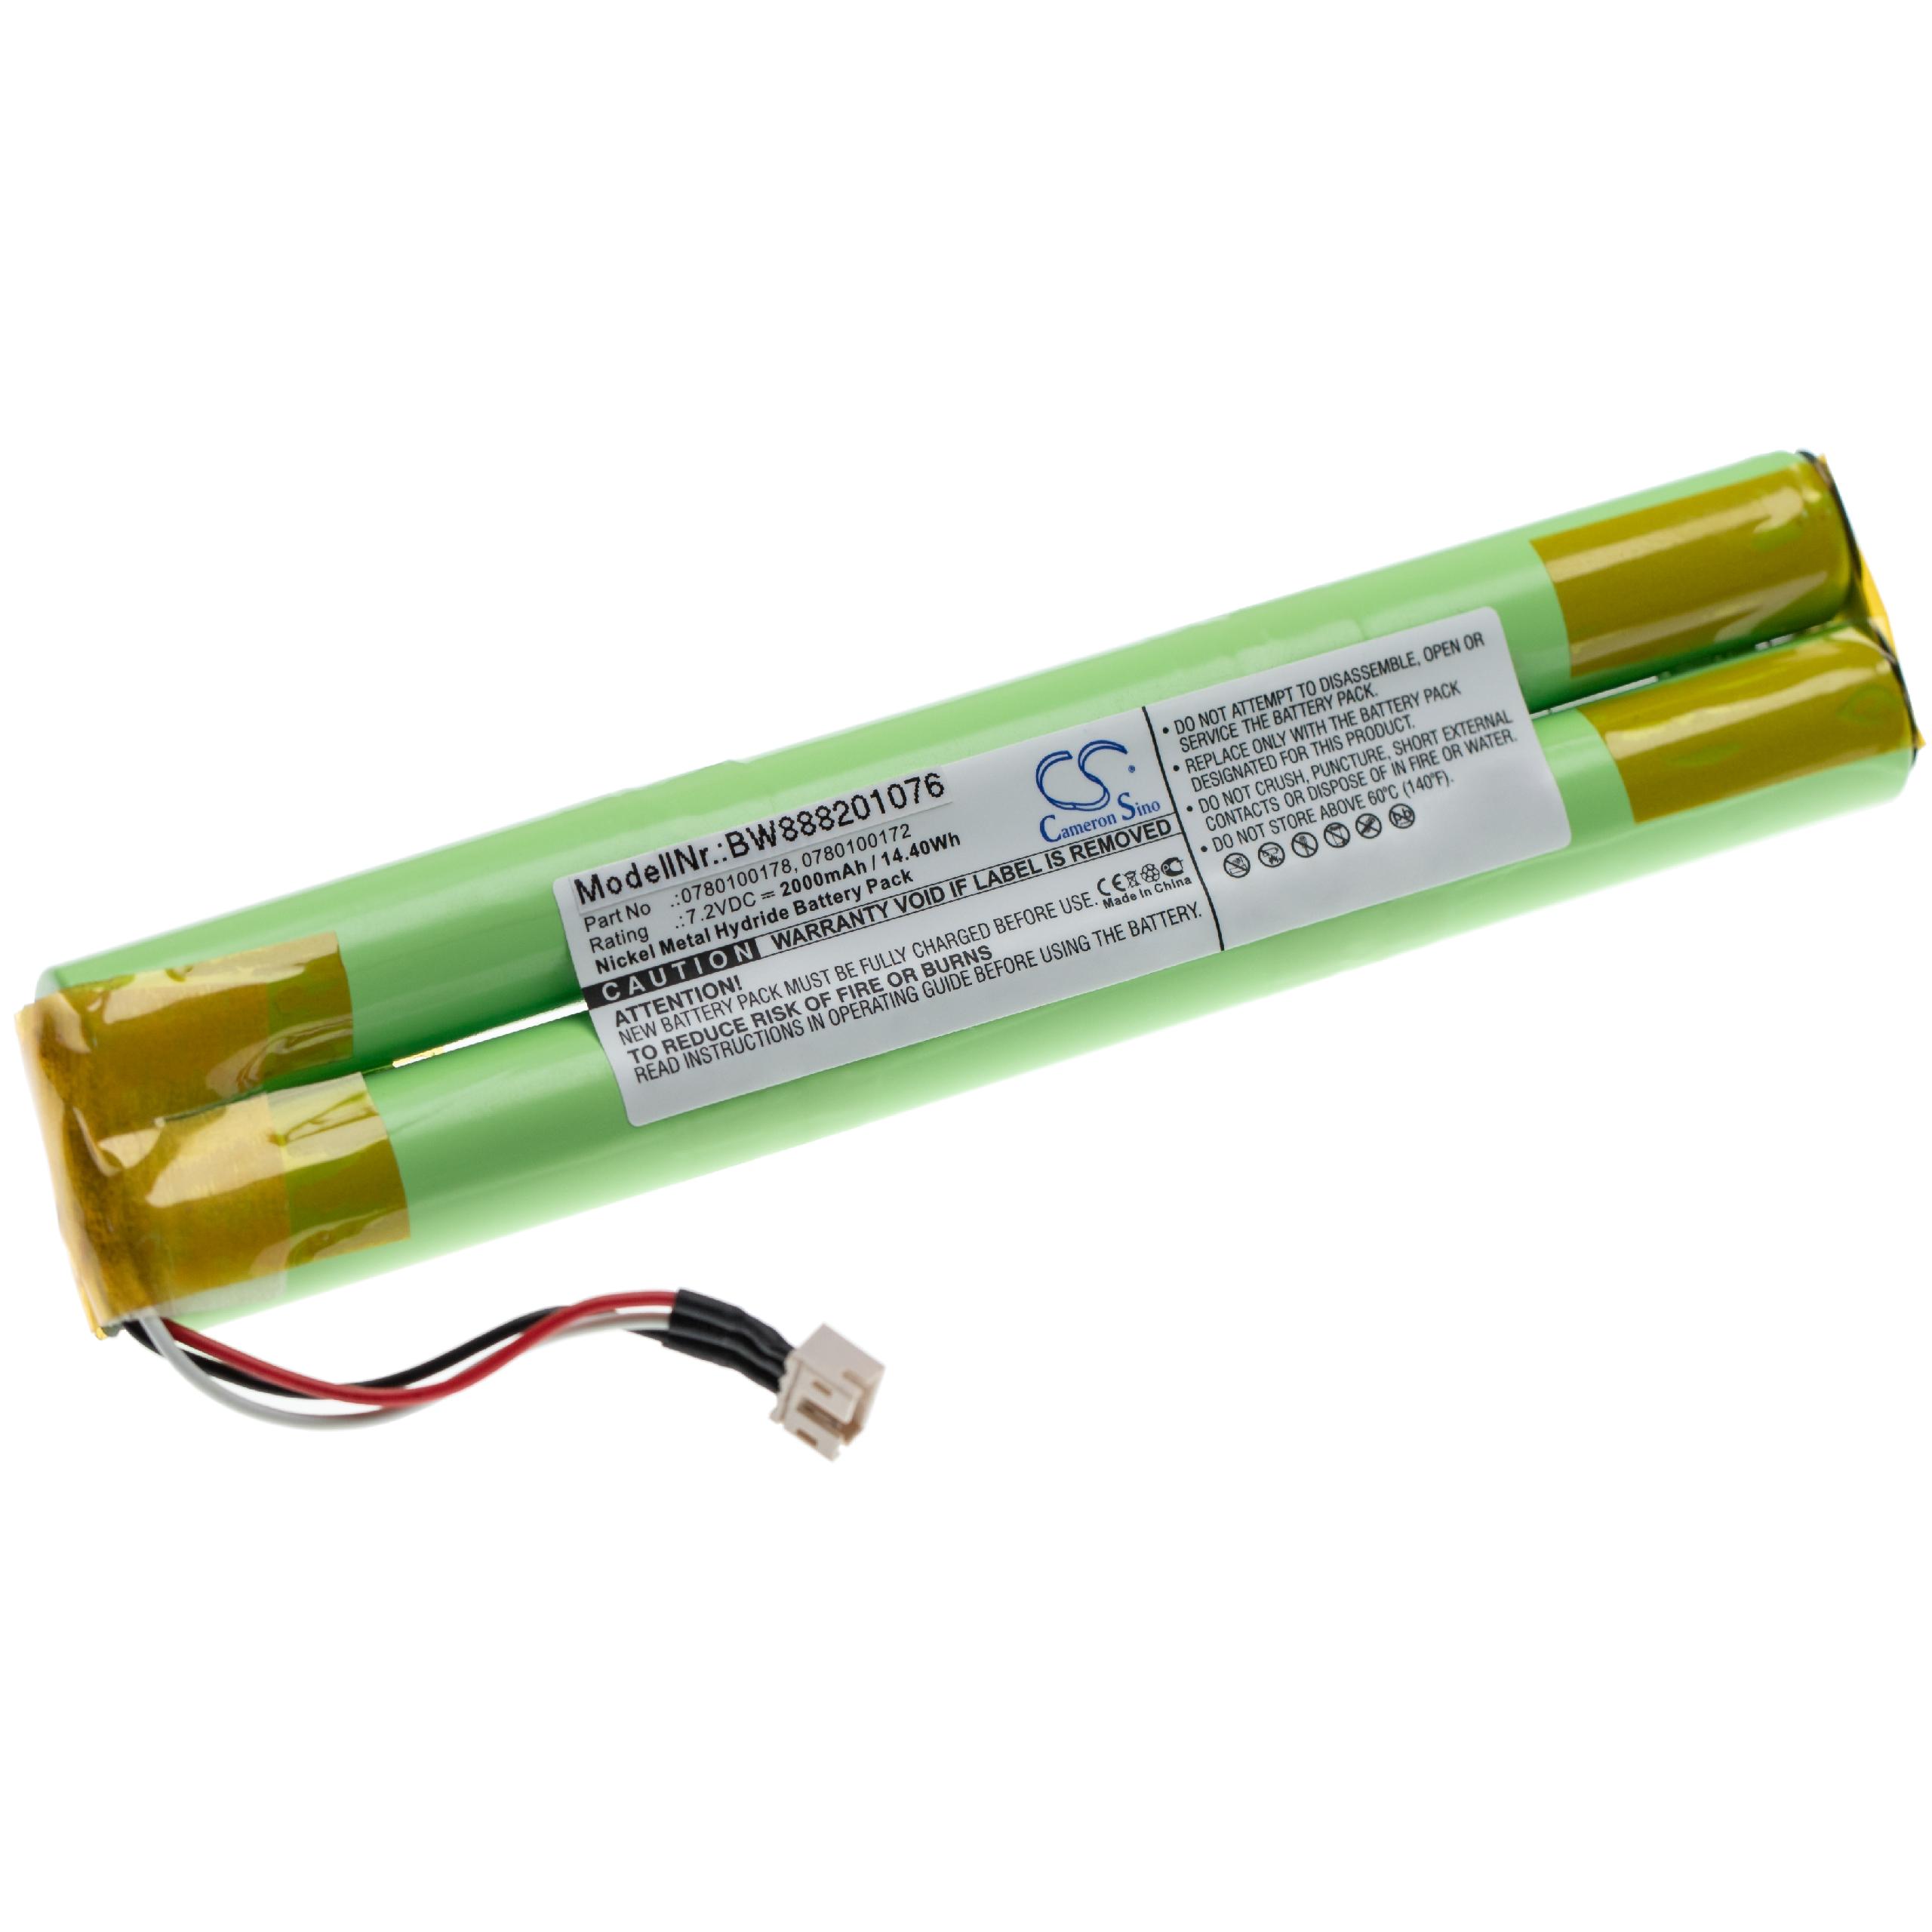 Alarm System Battery Replacement for Paradox Magellan 0780100172, 0780100178 - 2000mAh 7.2V NiMH